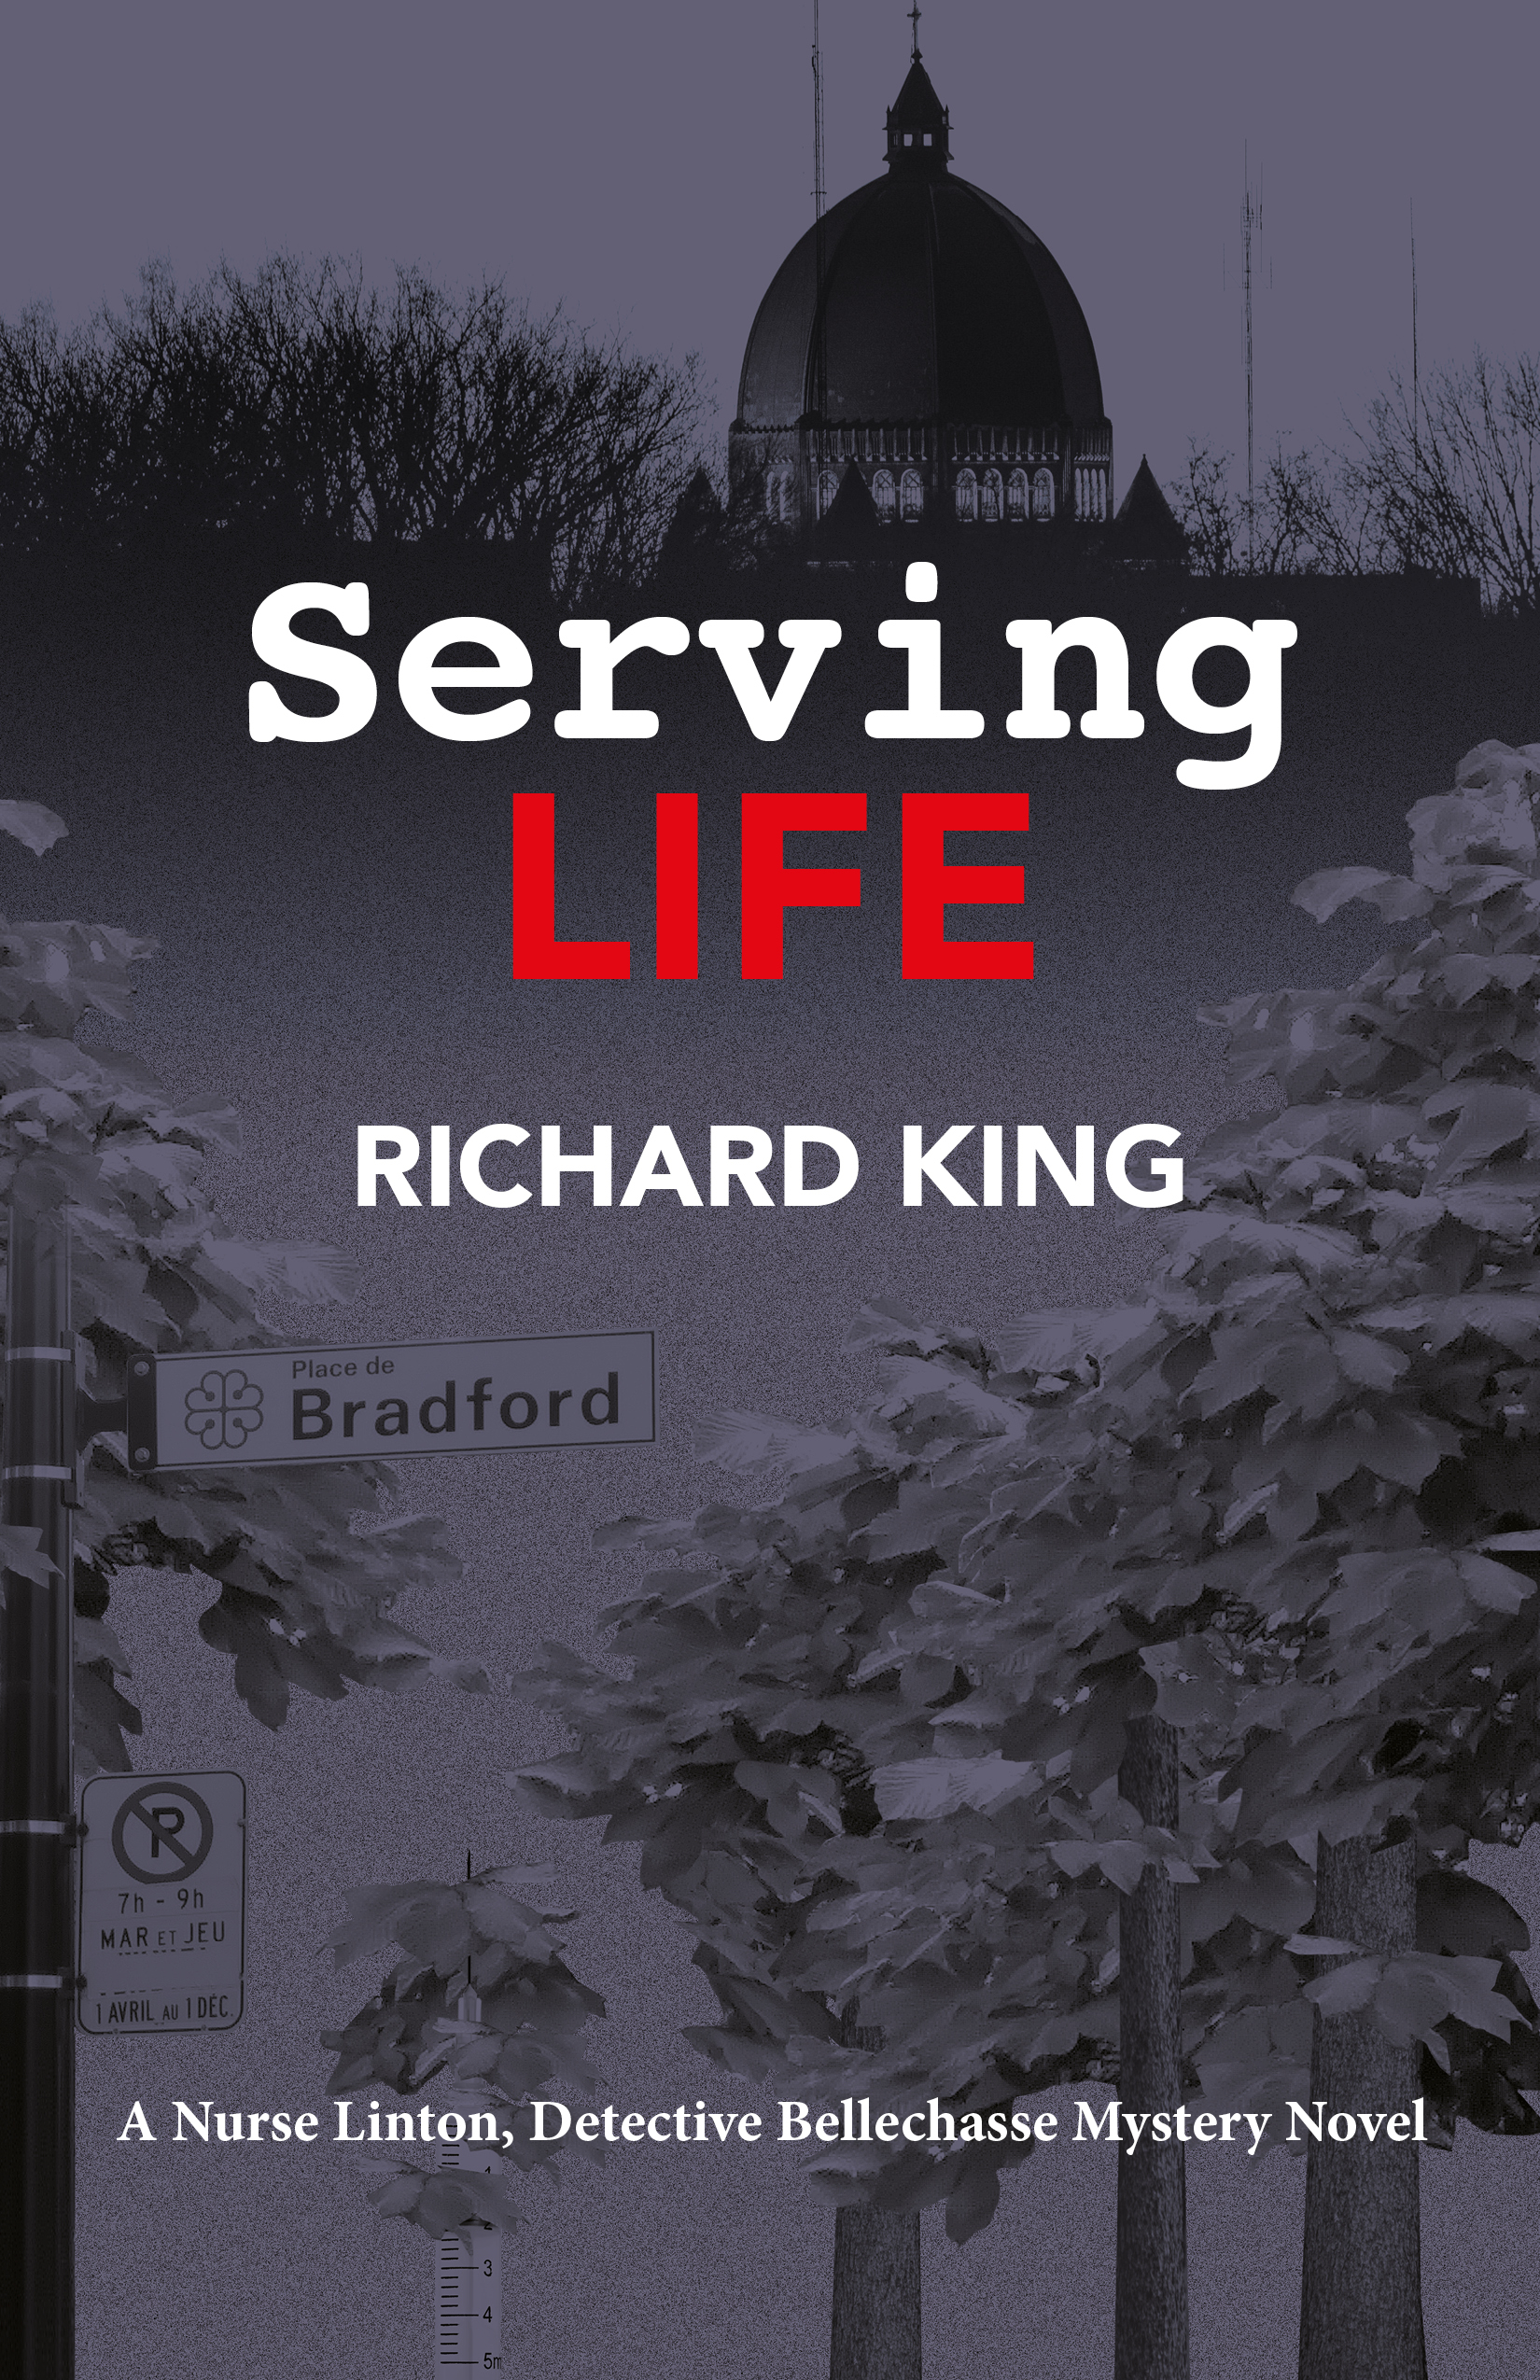 Richard King’s Serving Life